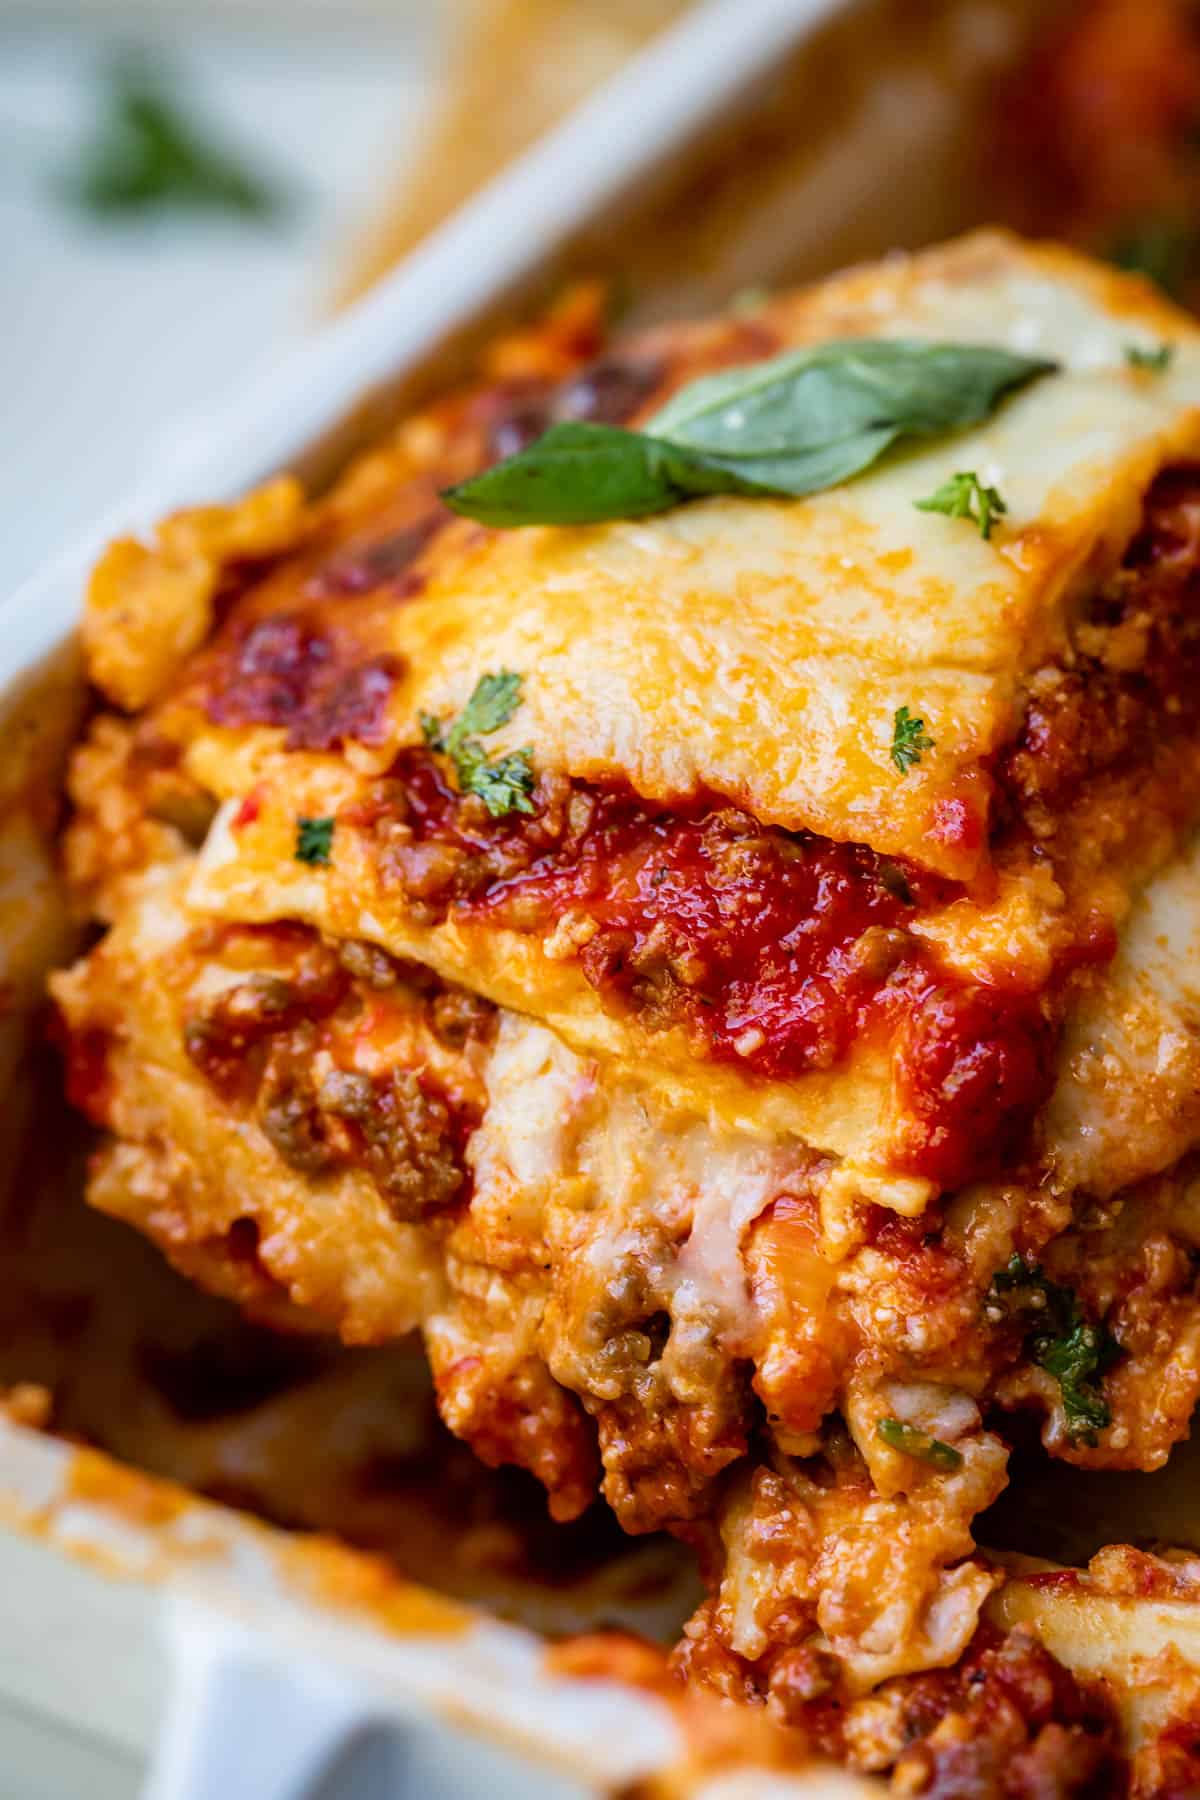 moneda comestible Saliente Killer Homemade Lasagna Recipe - The Food Charlatan